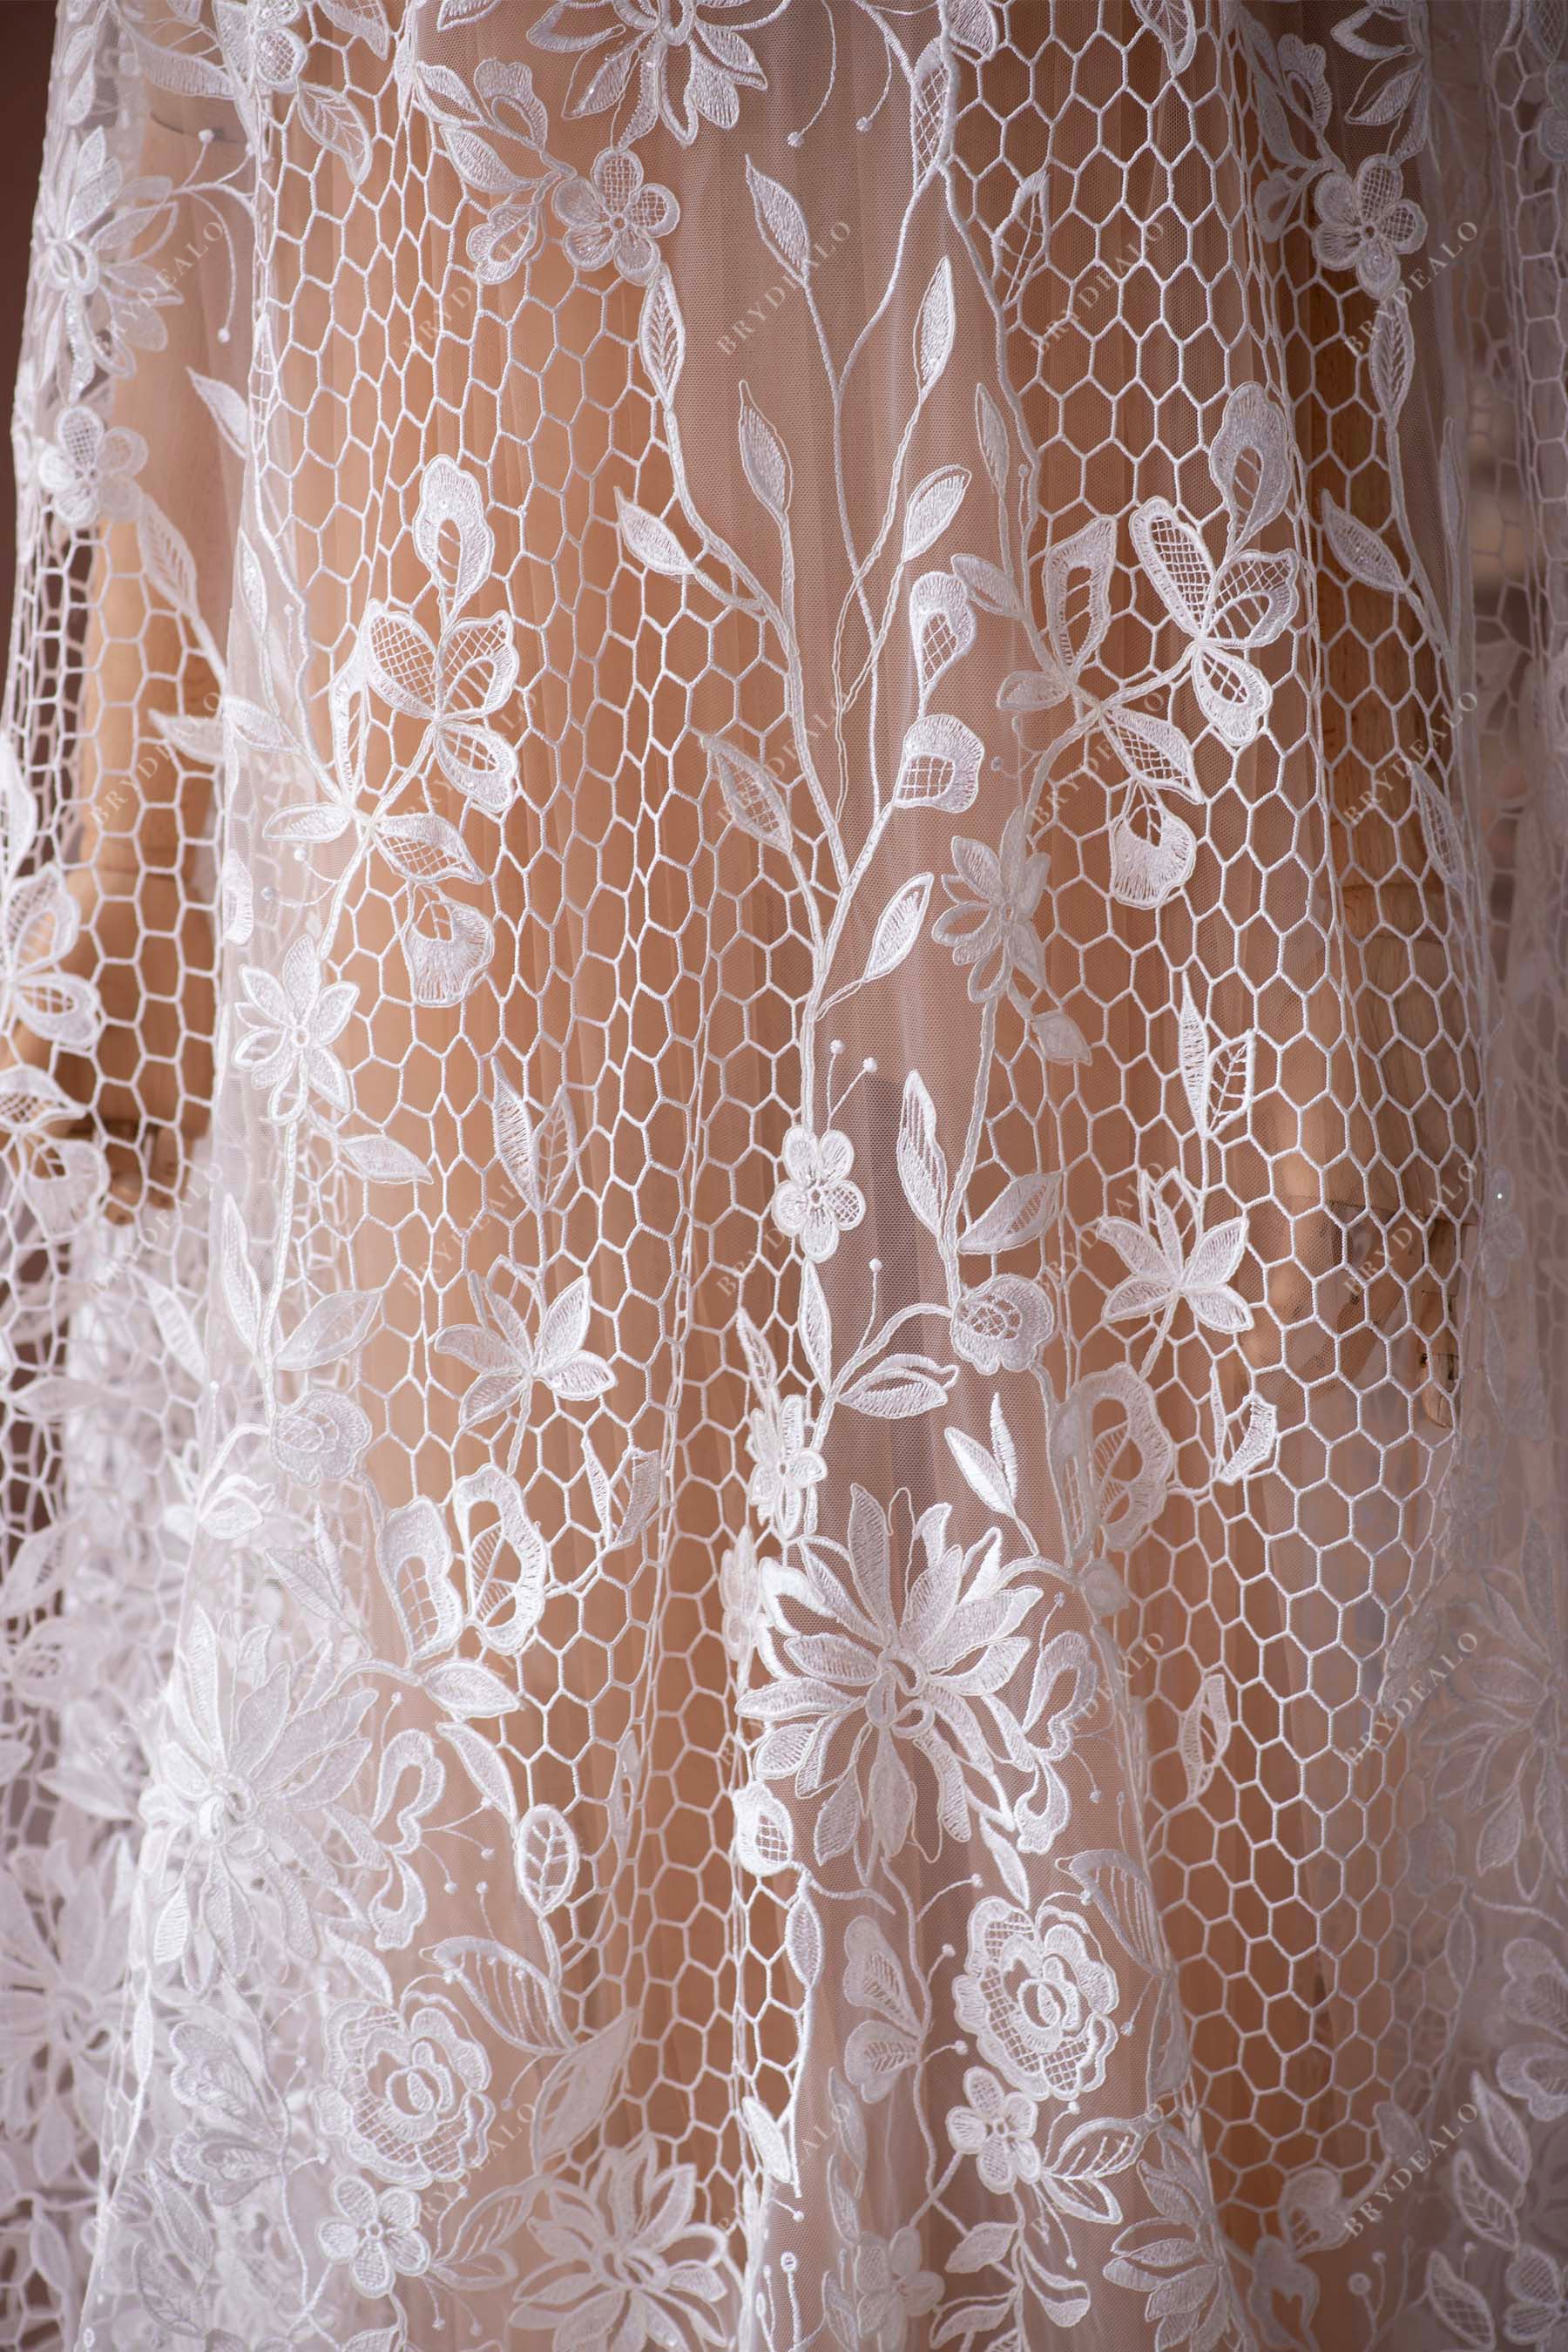 high end wedding dress lace fabric